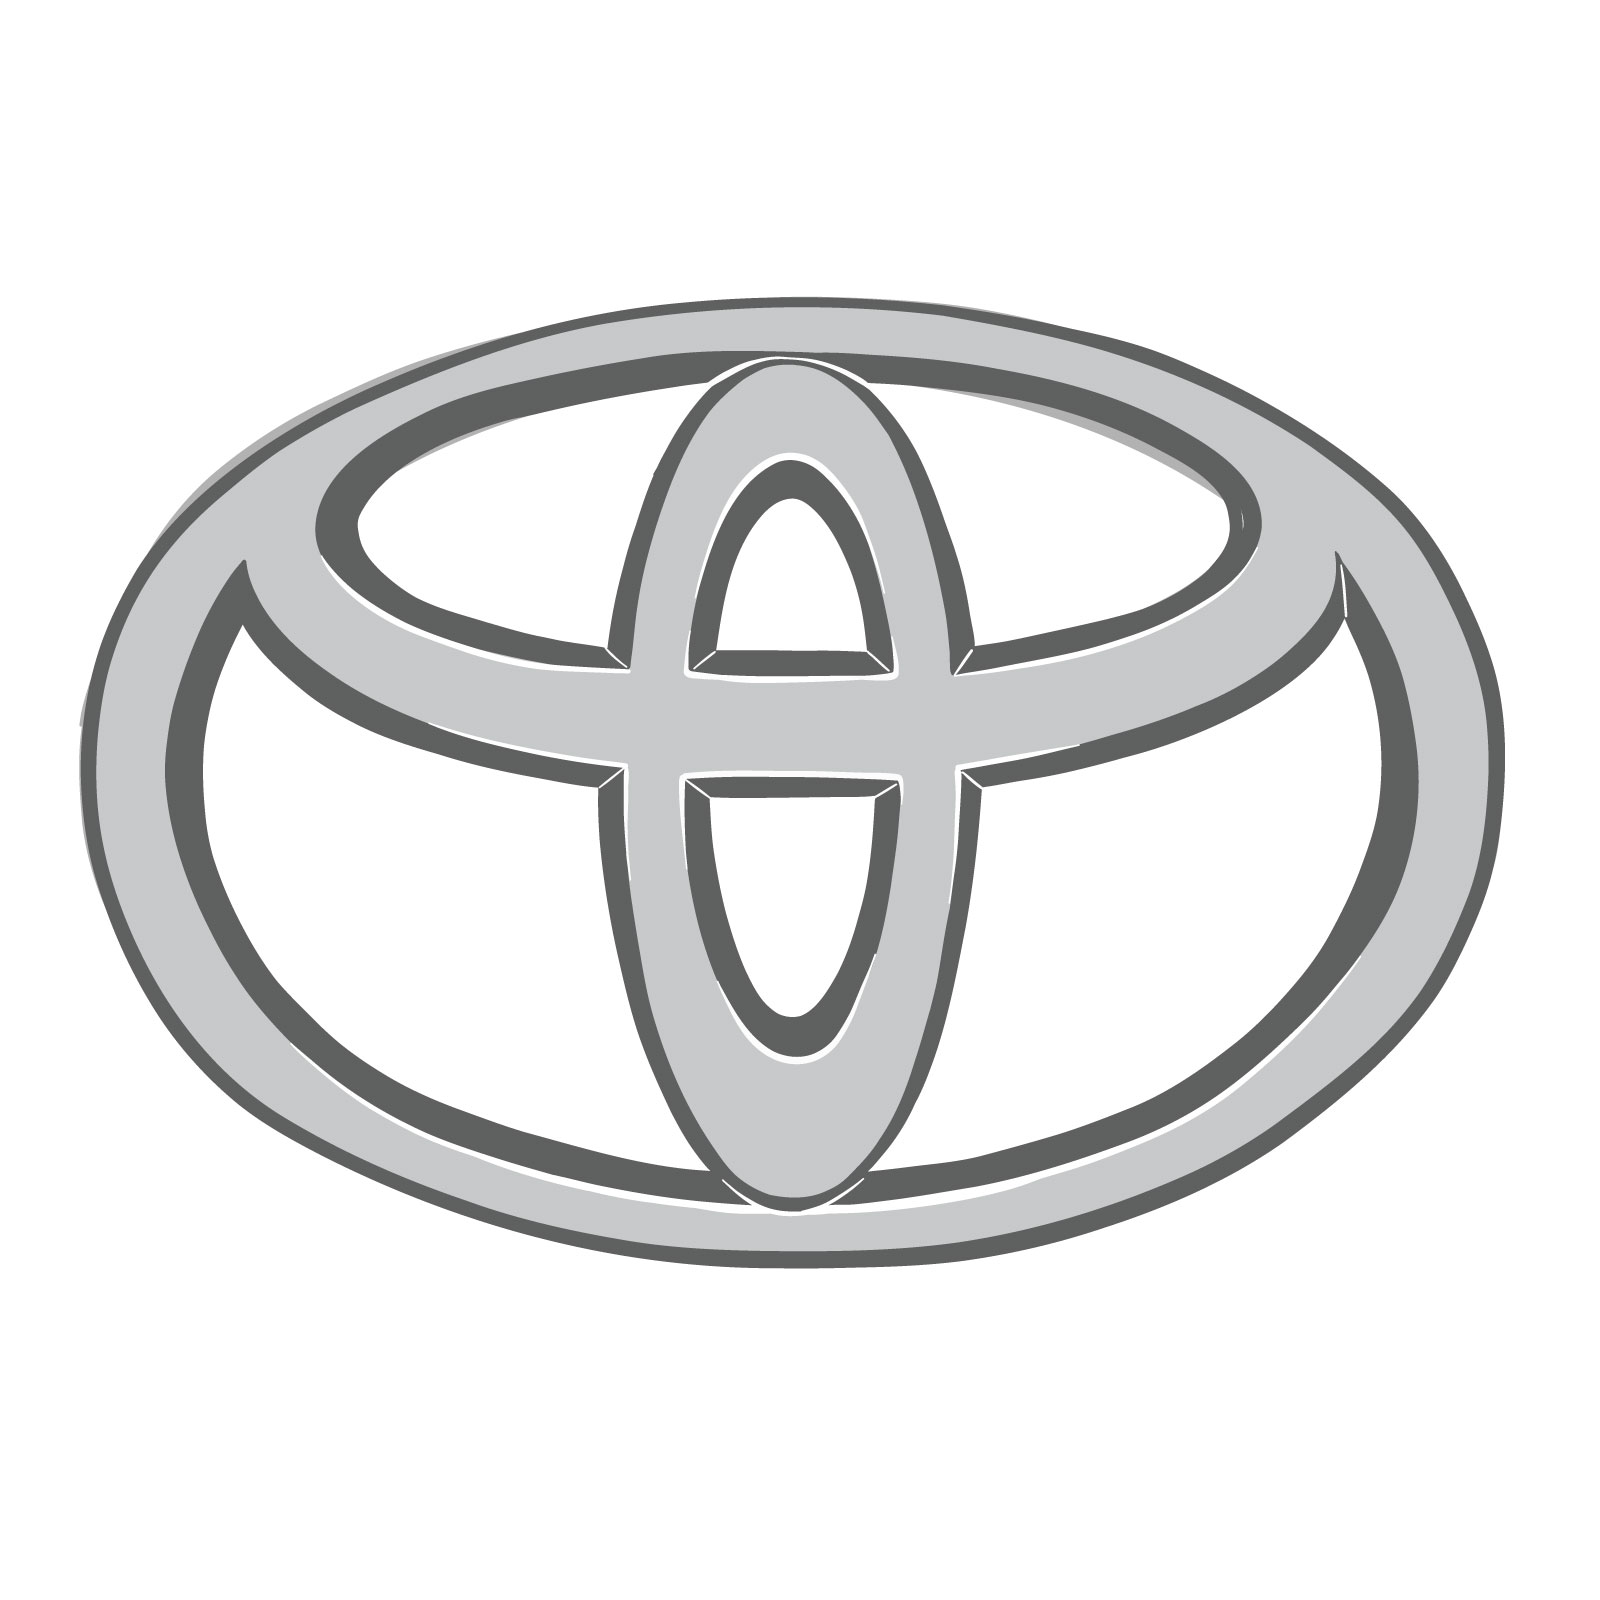 How to draw a Toyota logo - step 13